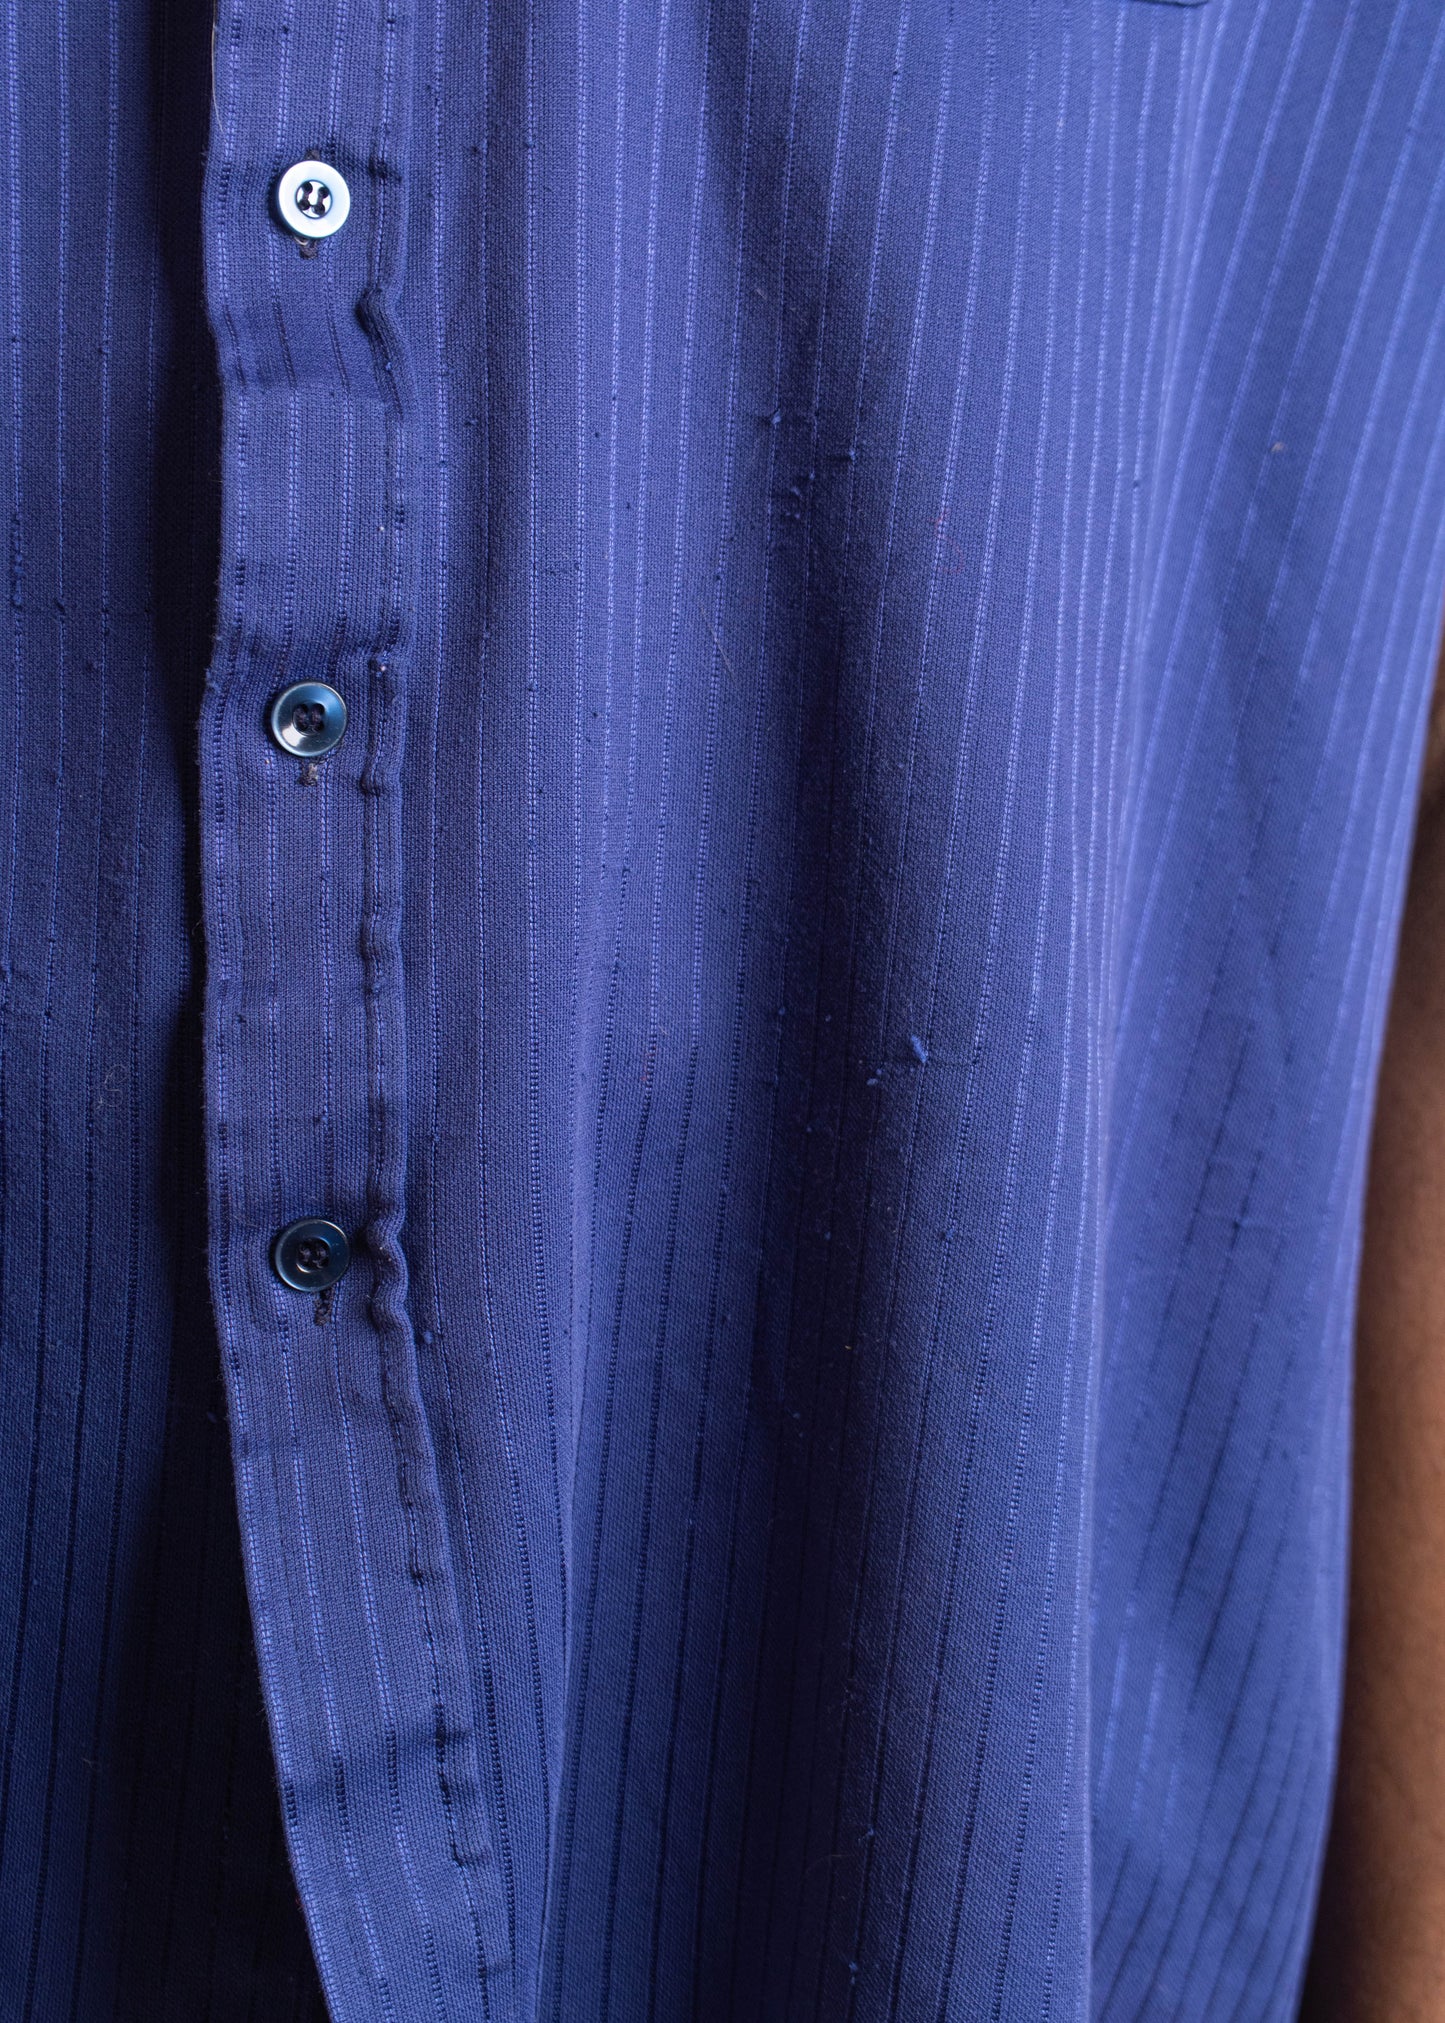 1980s Blair Stripe Pattern Short Sleeve Button Up Shirt Size M/L